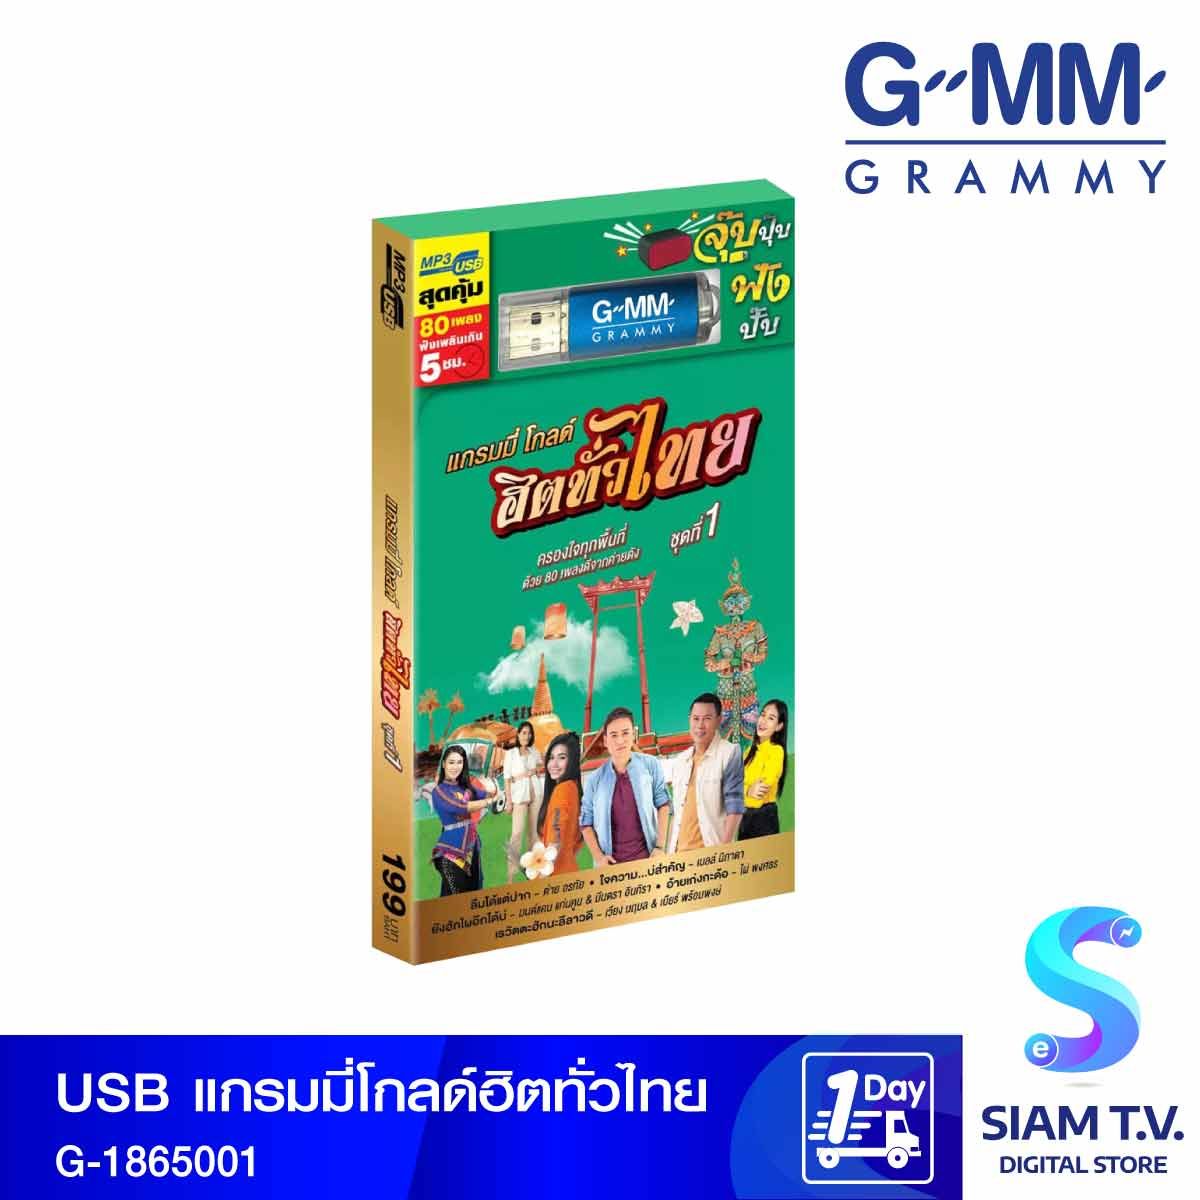 GMM GRAMMY USBแกรมมี่โกลด์ฮิตทั่วไทย G-1865001